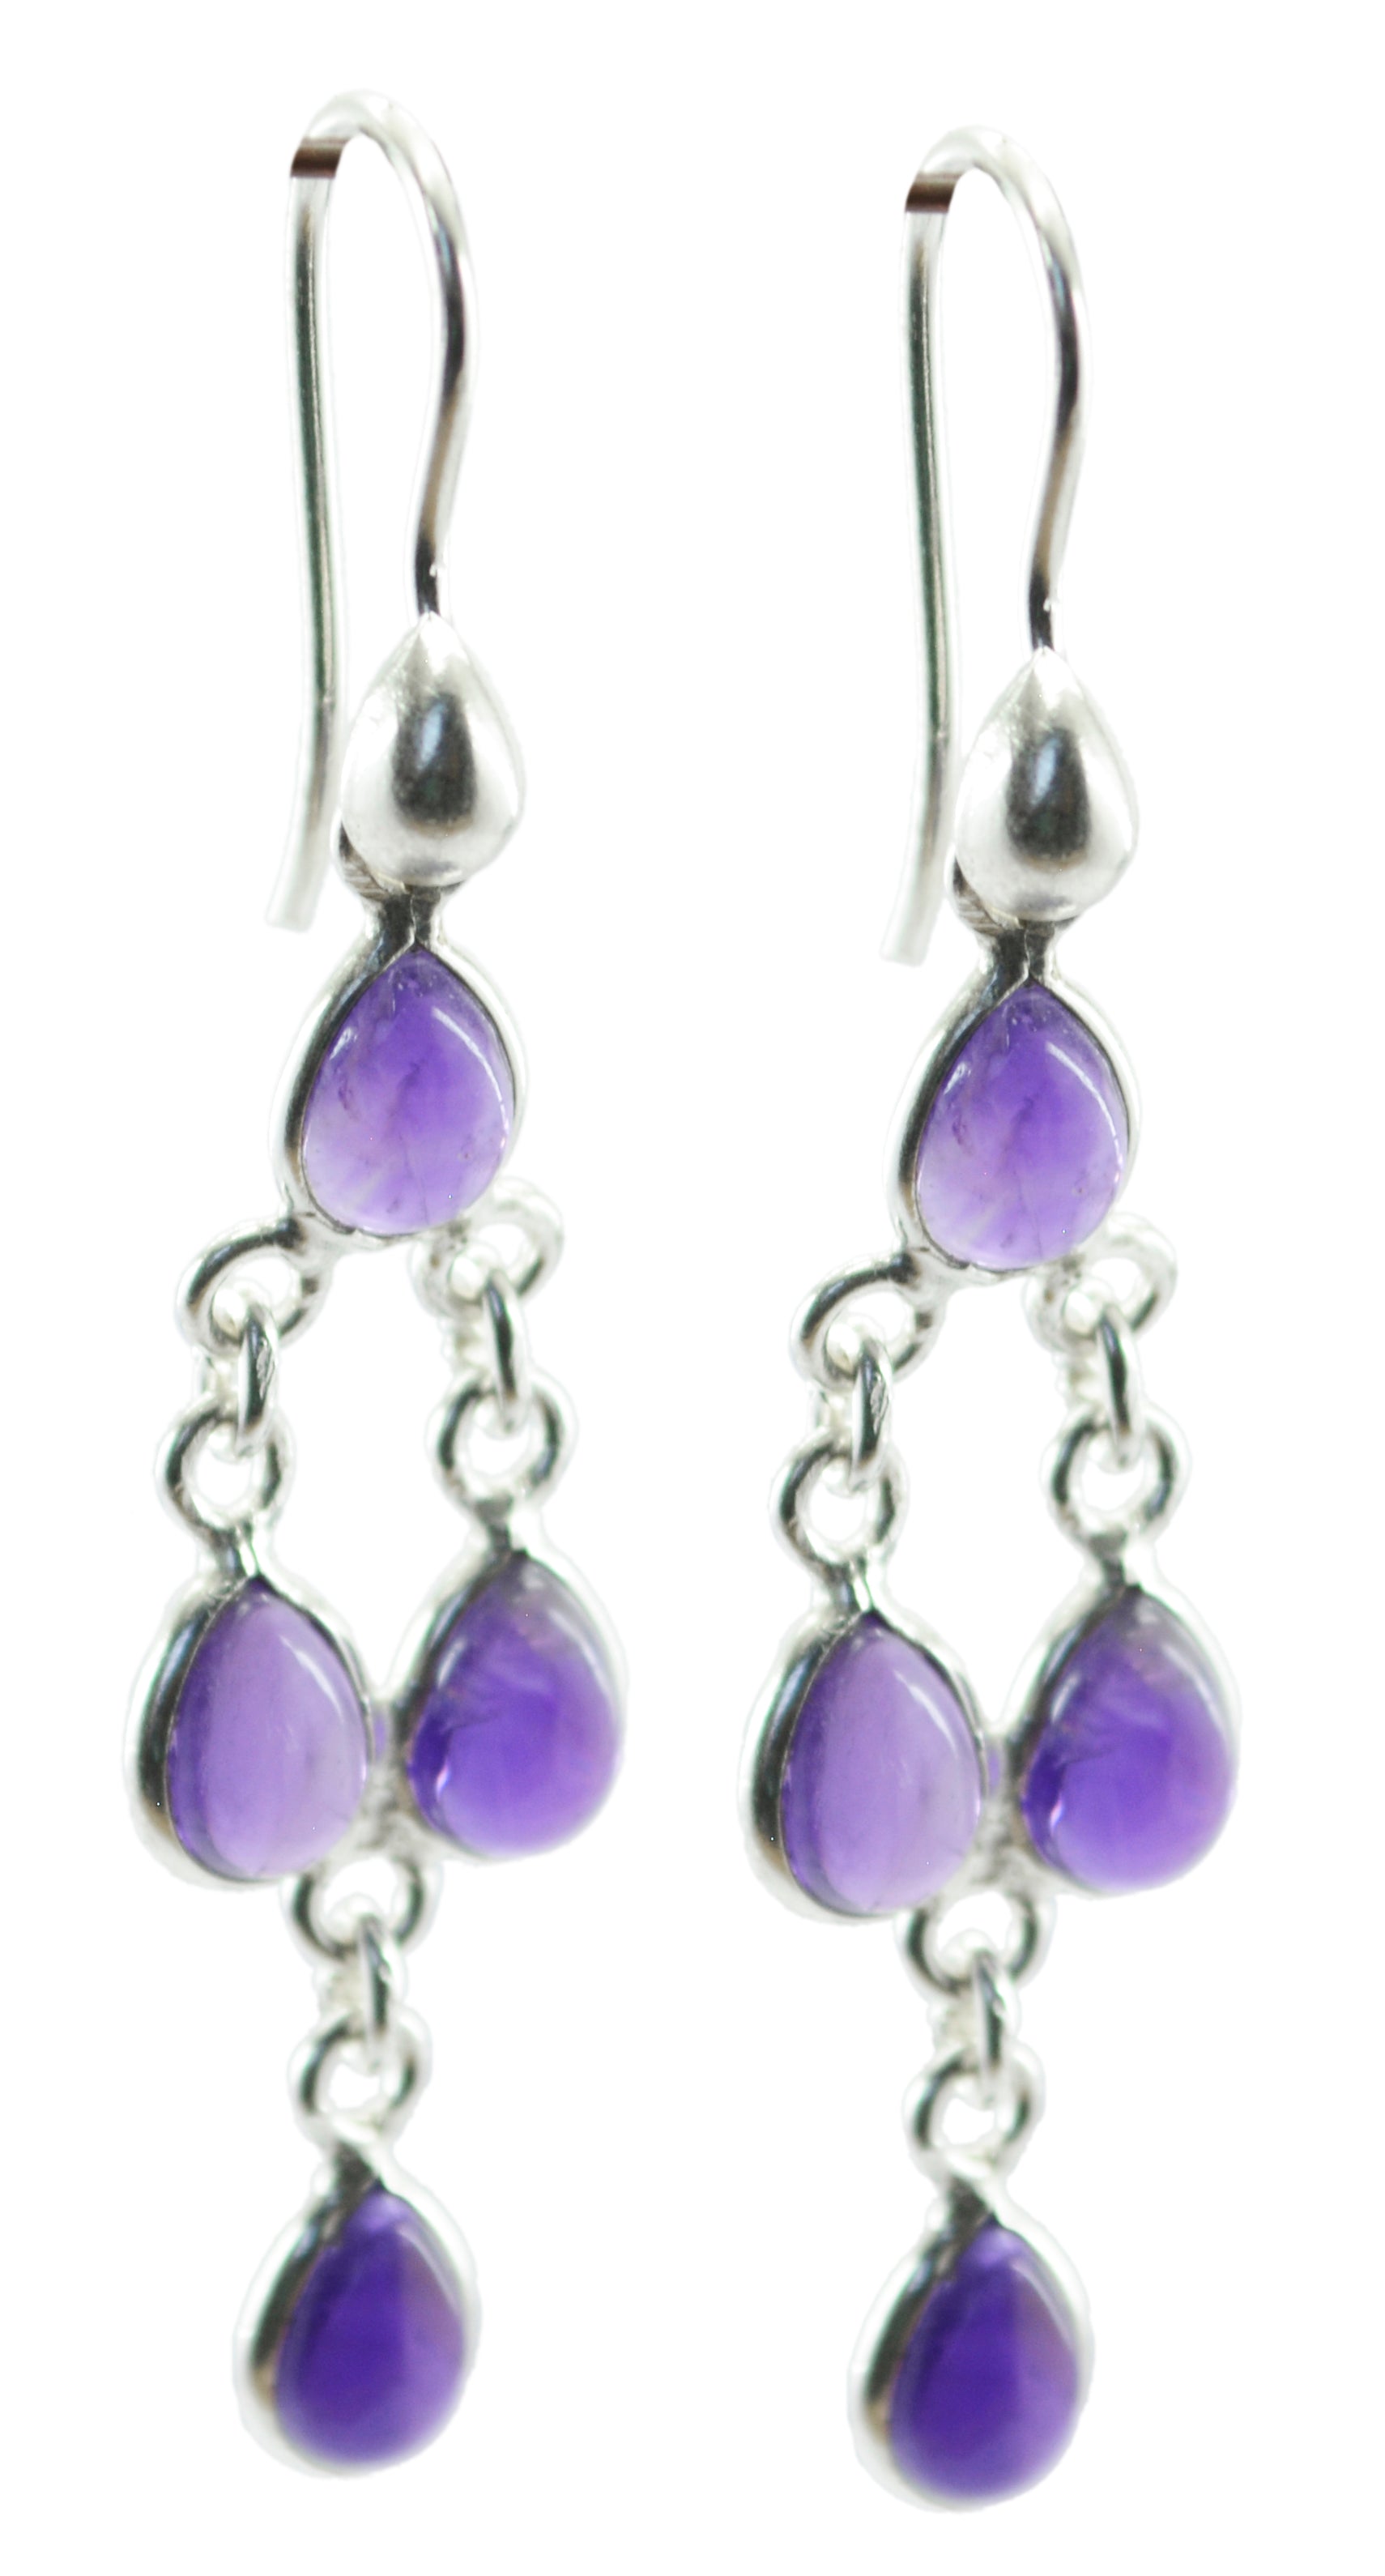 Riyo Real Gemstones pear Cabochon Purple Amethyst Silver Earrings gift